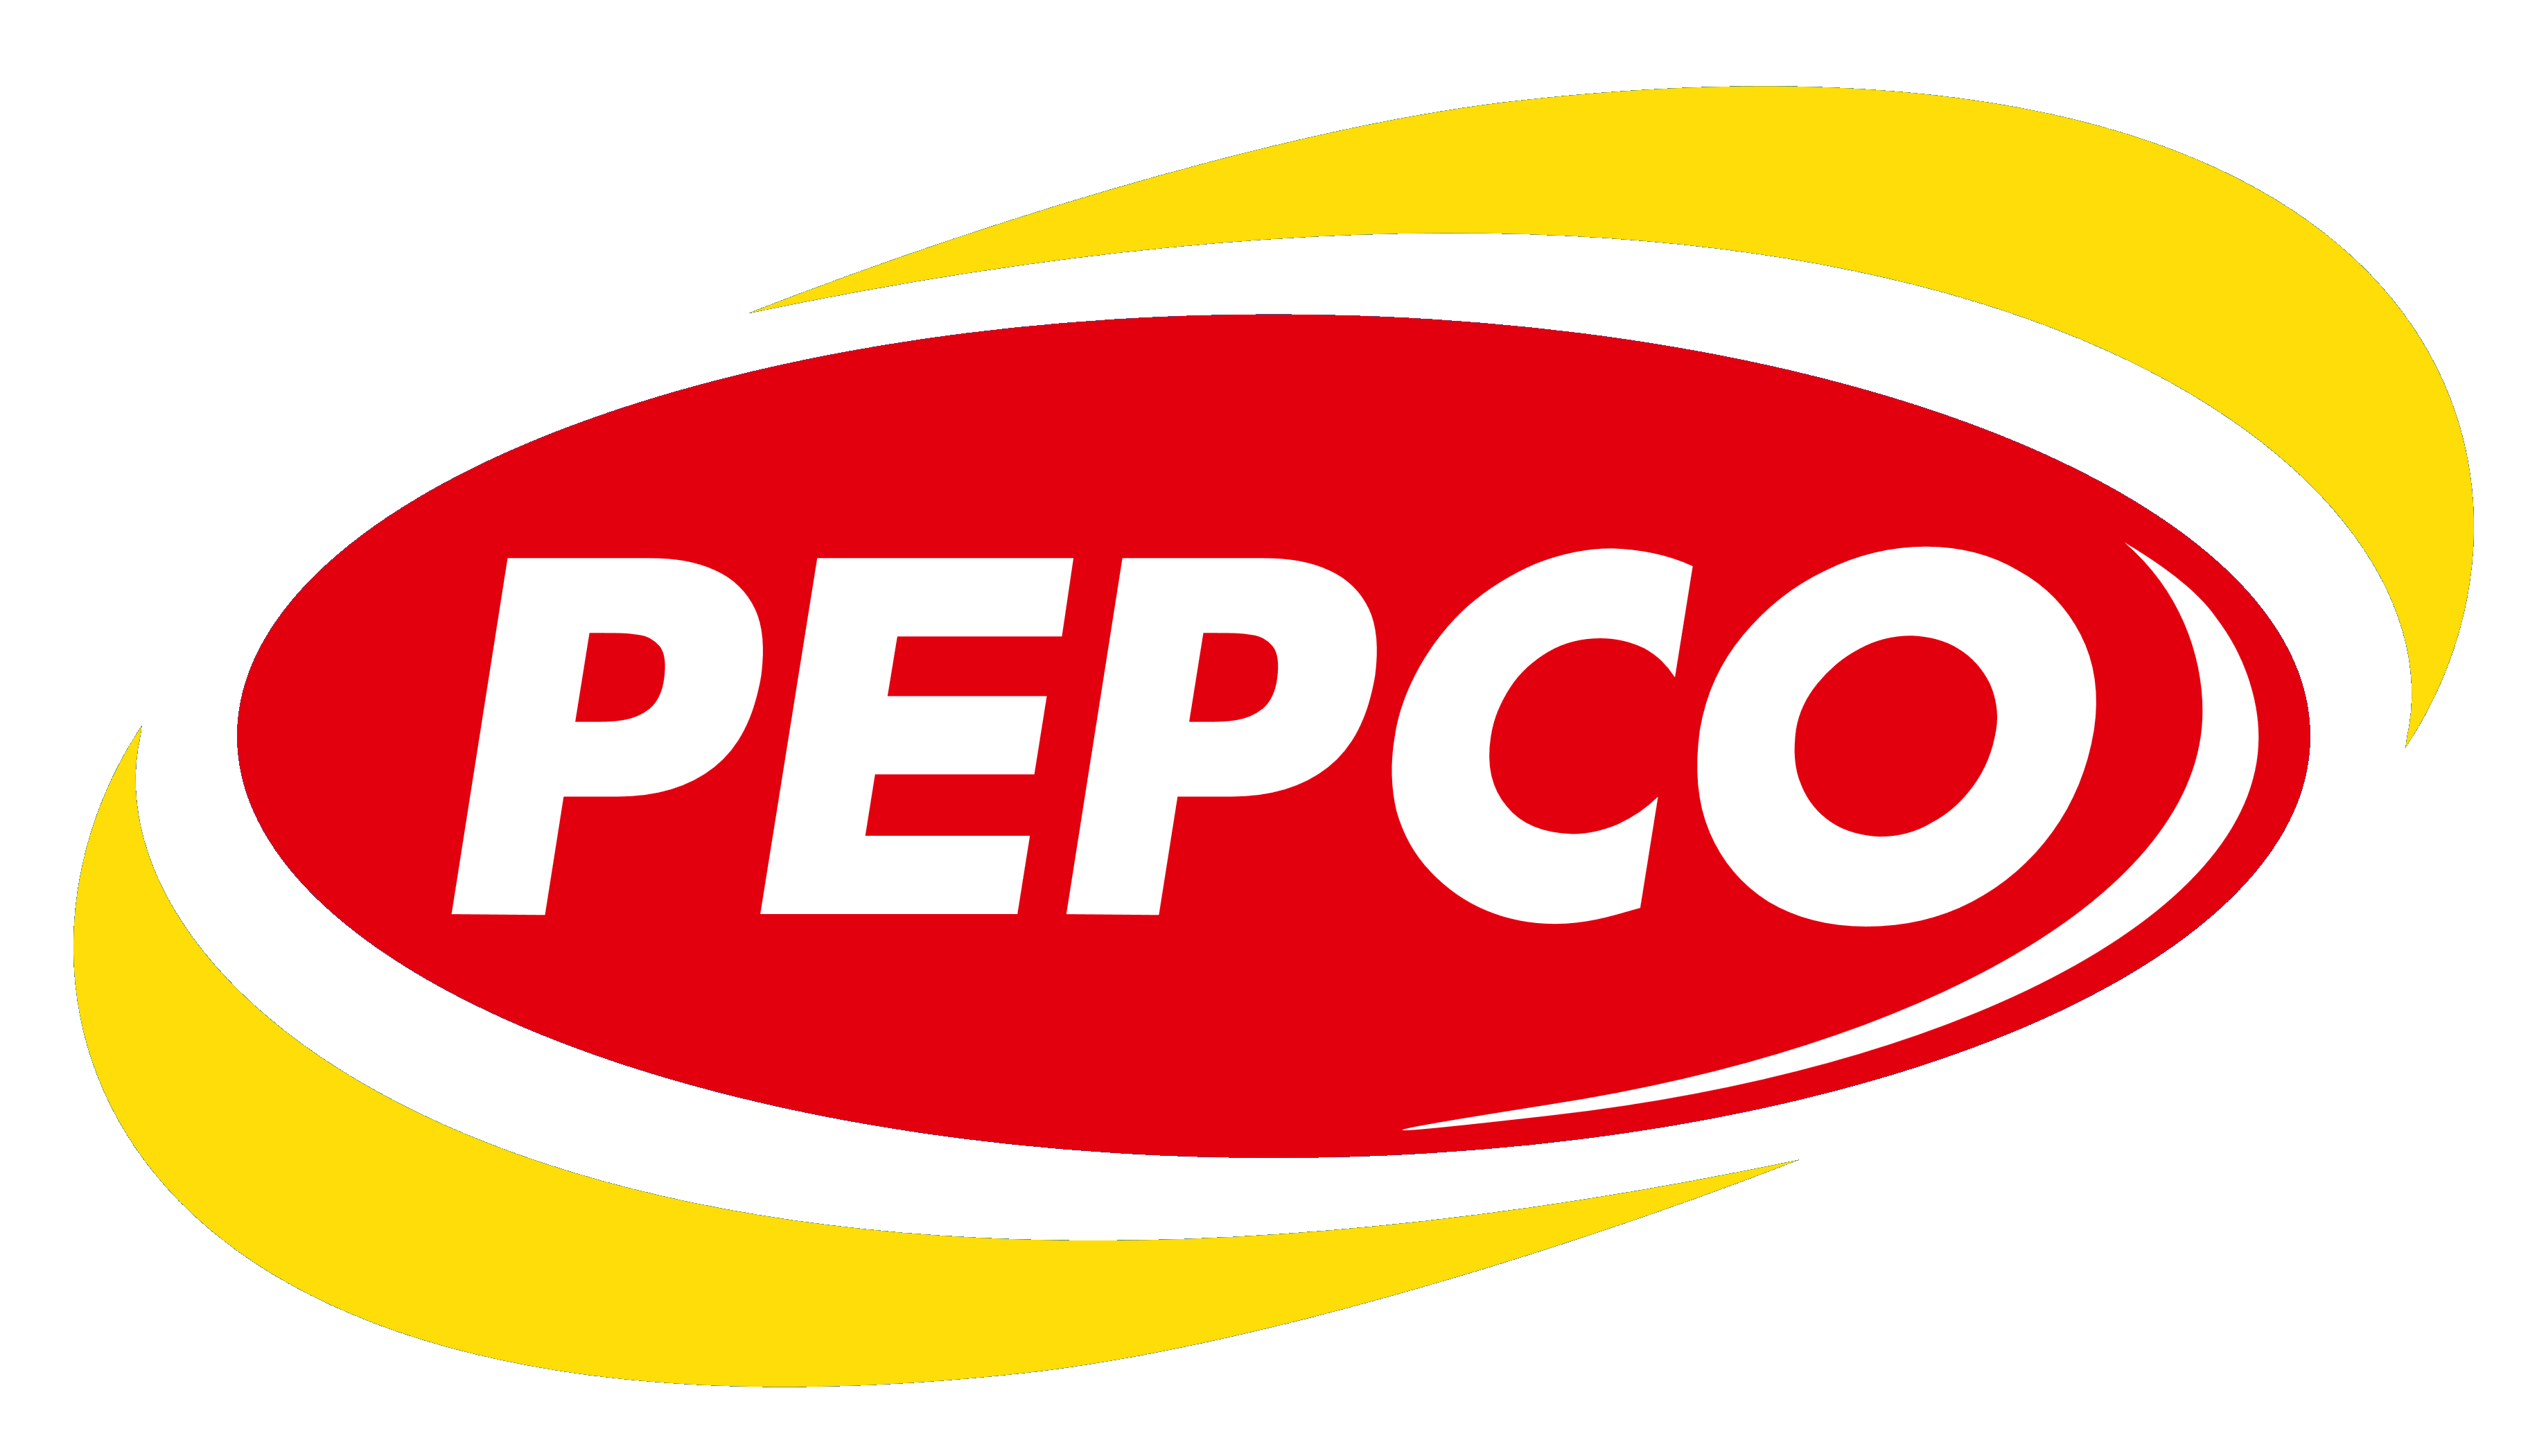 Pepco Logo - Pepco – Logos, brands and logotypes